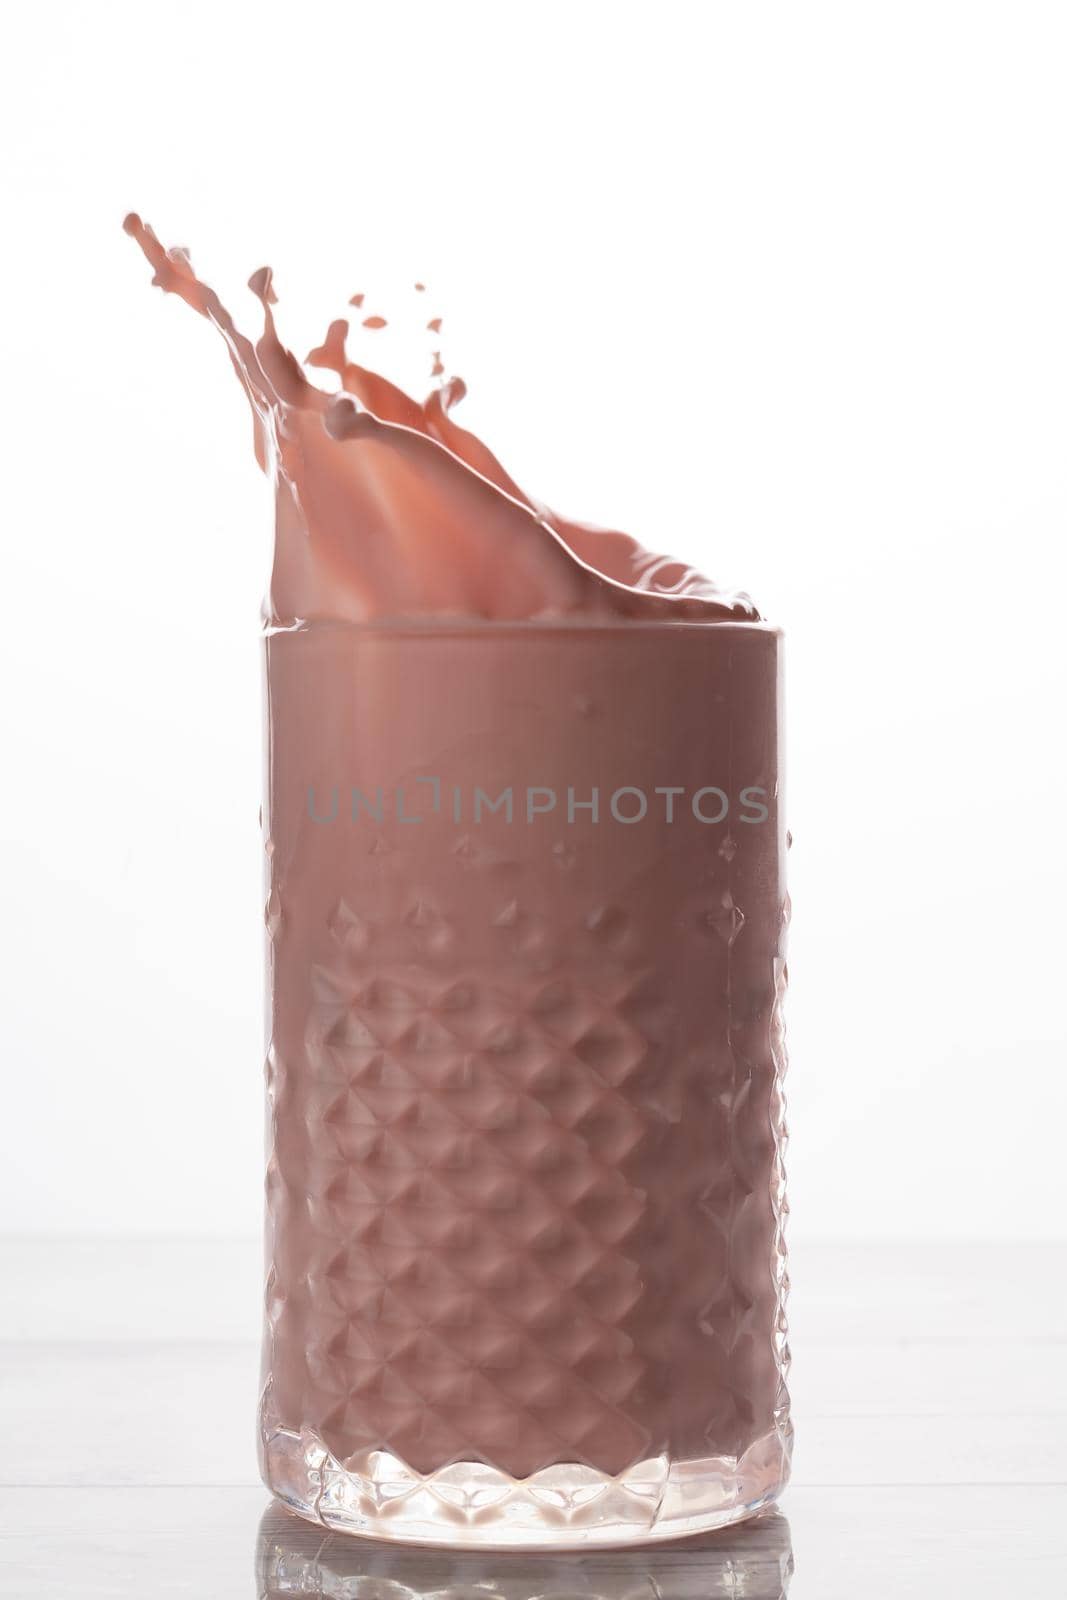 strawberry smoothie with natural fruit, splash effect by joseantona